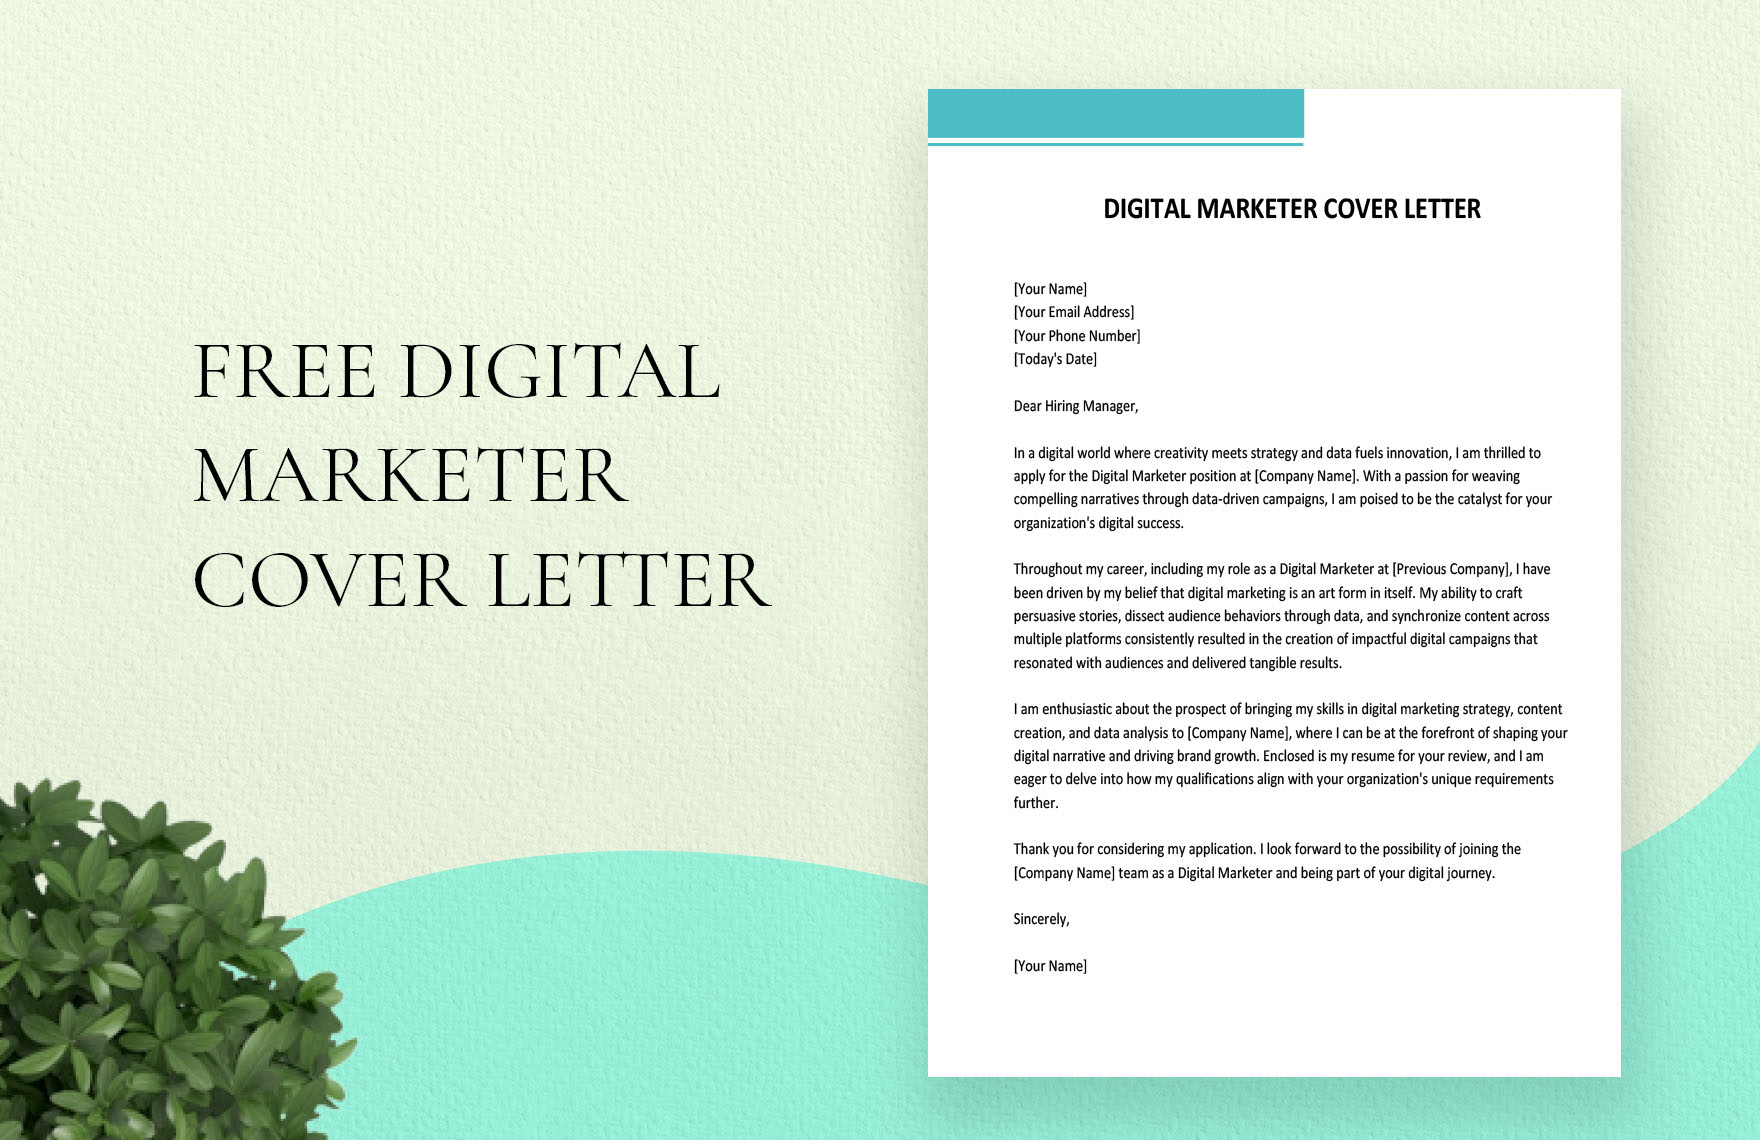 Digital Marketer Cover Letter in Word, Google Docs